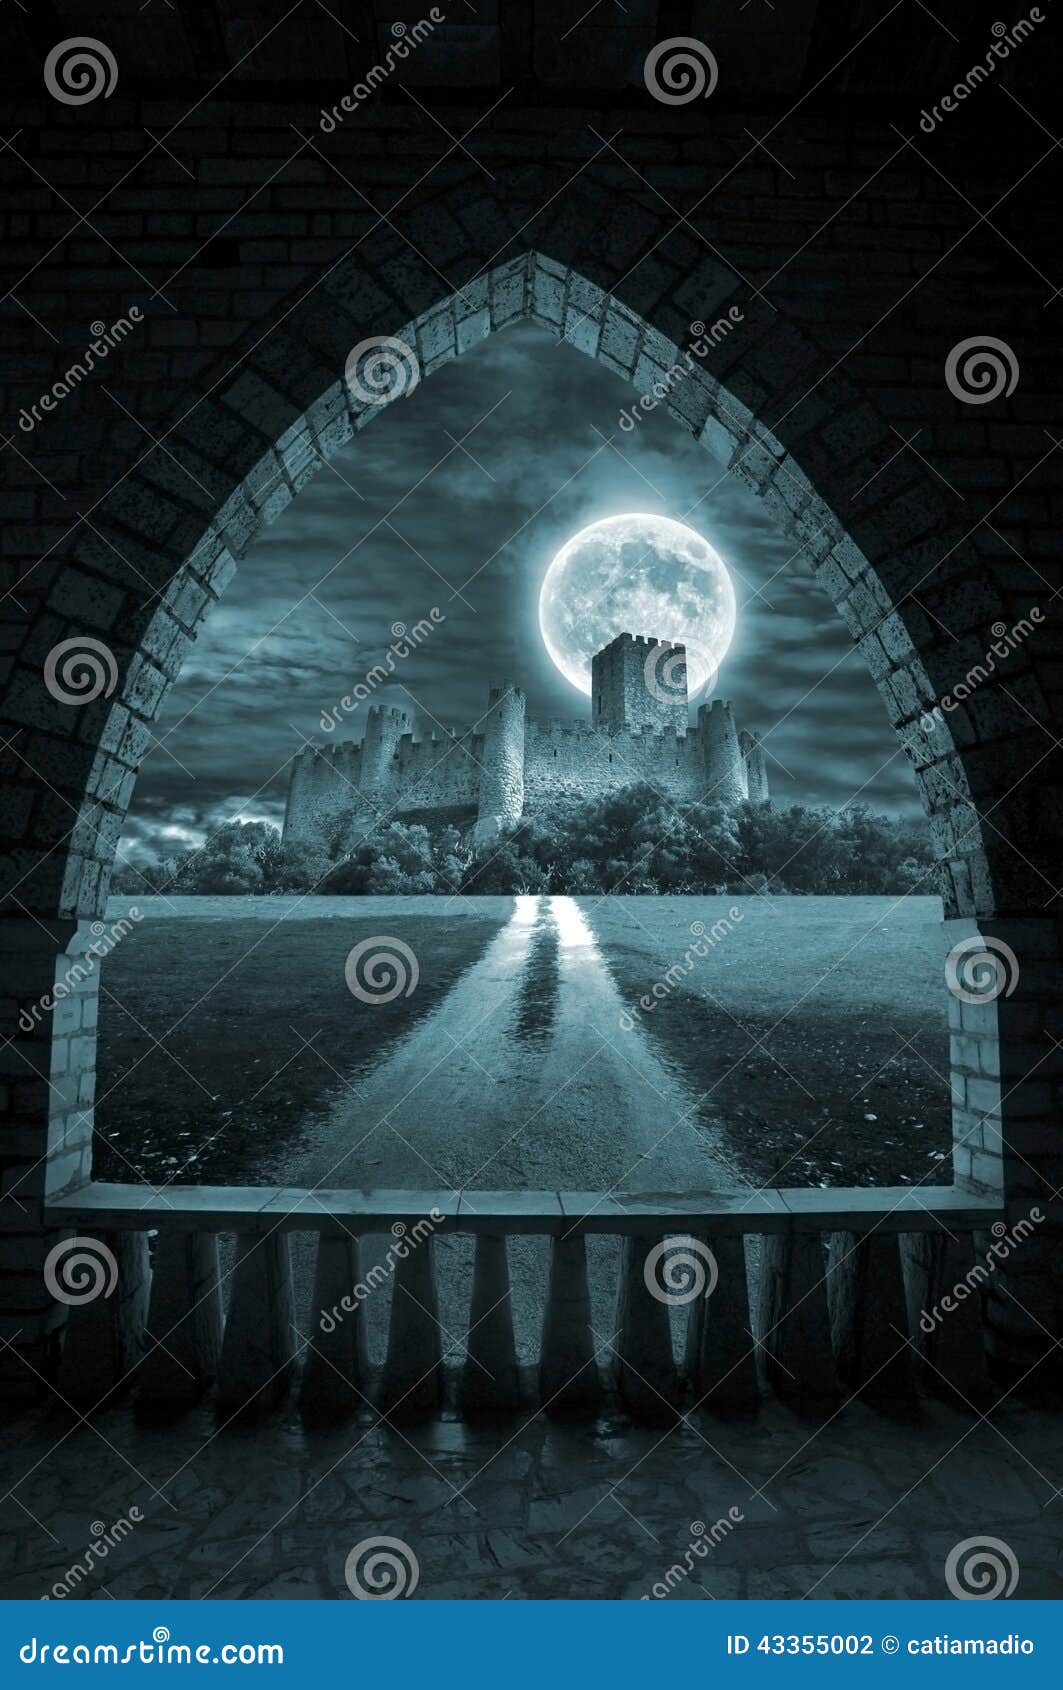 fantasy night archway